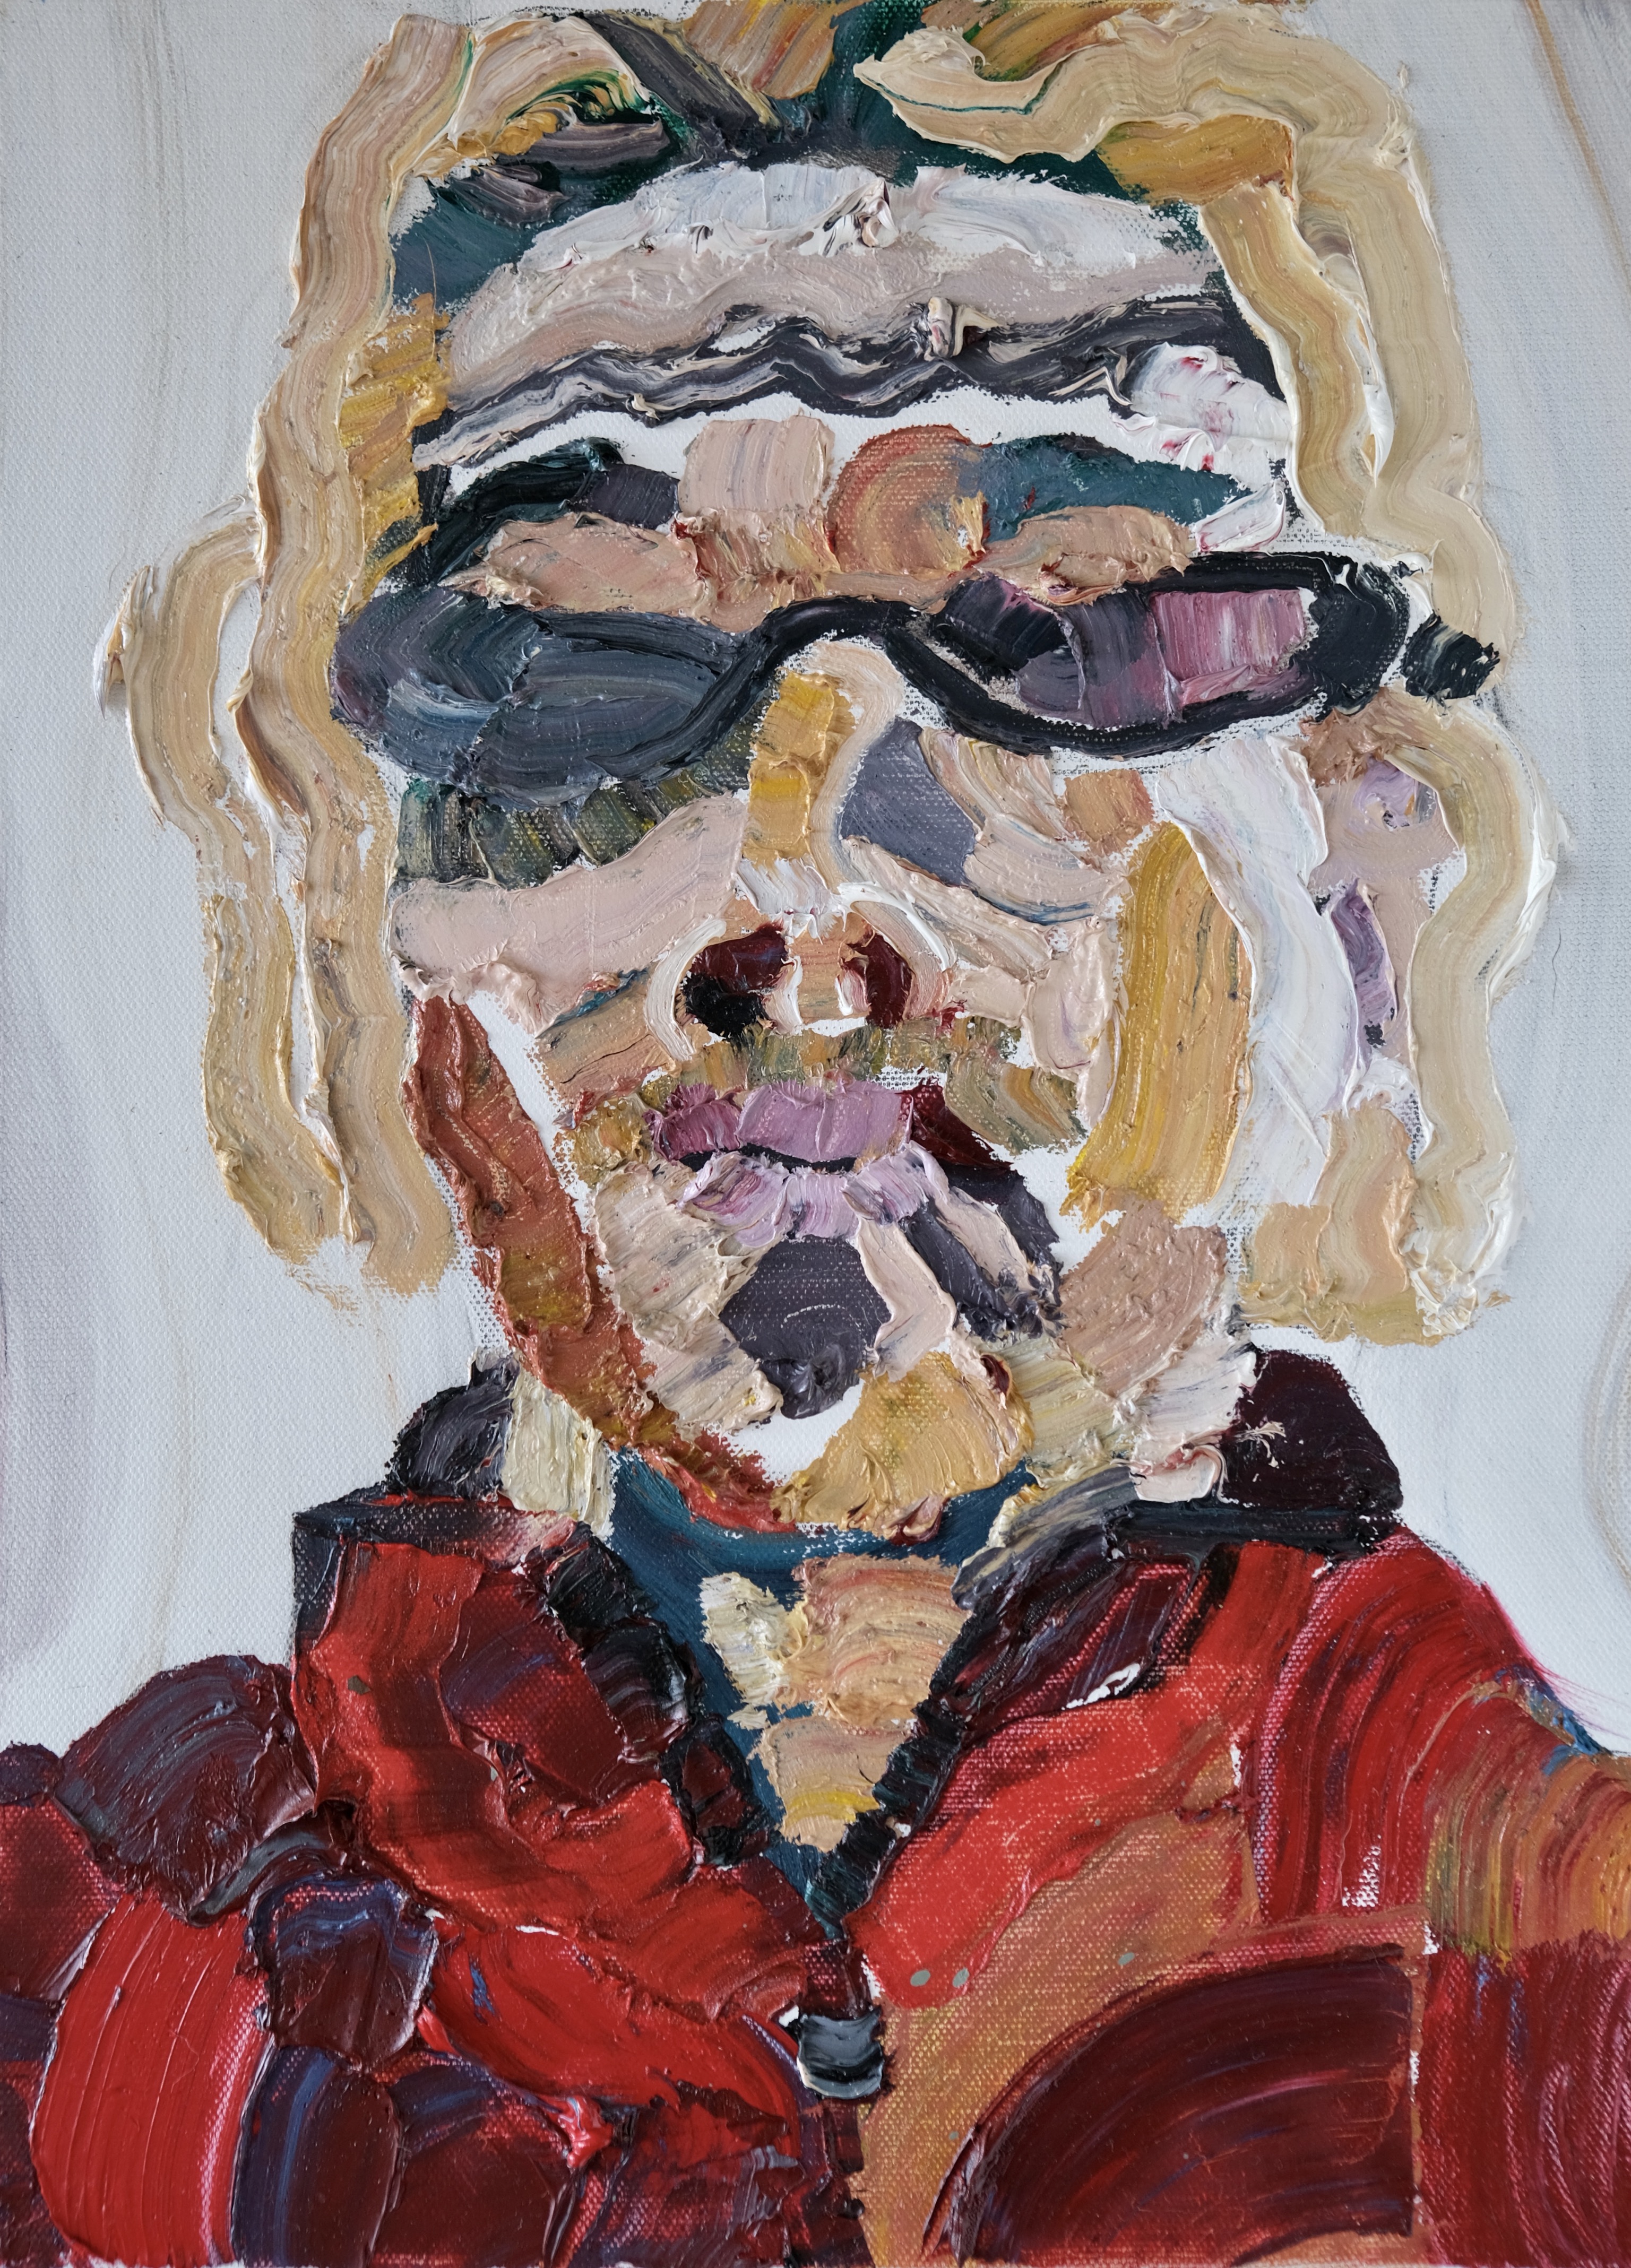 Sister Cinnamon, self-portrait by Zaide | Lethbridge 20000 2022 Finalists | Lethbridge Gallery